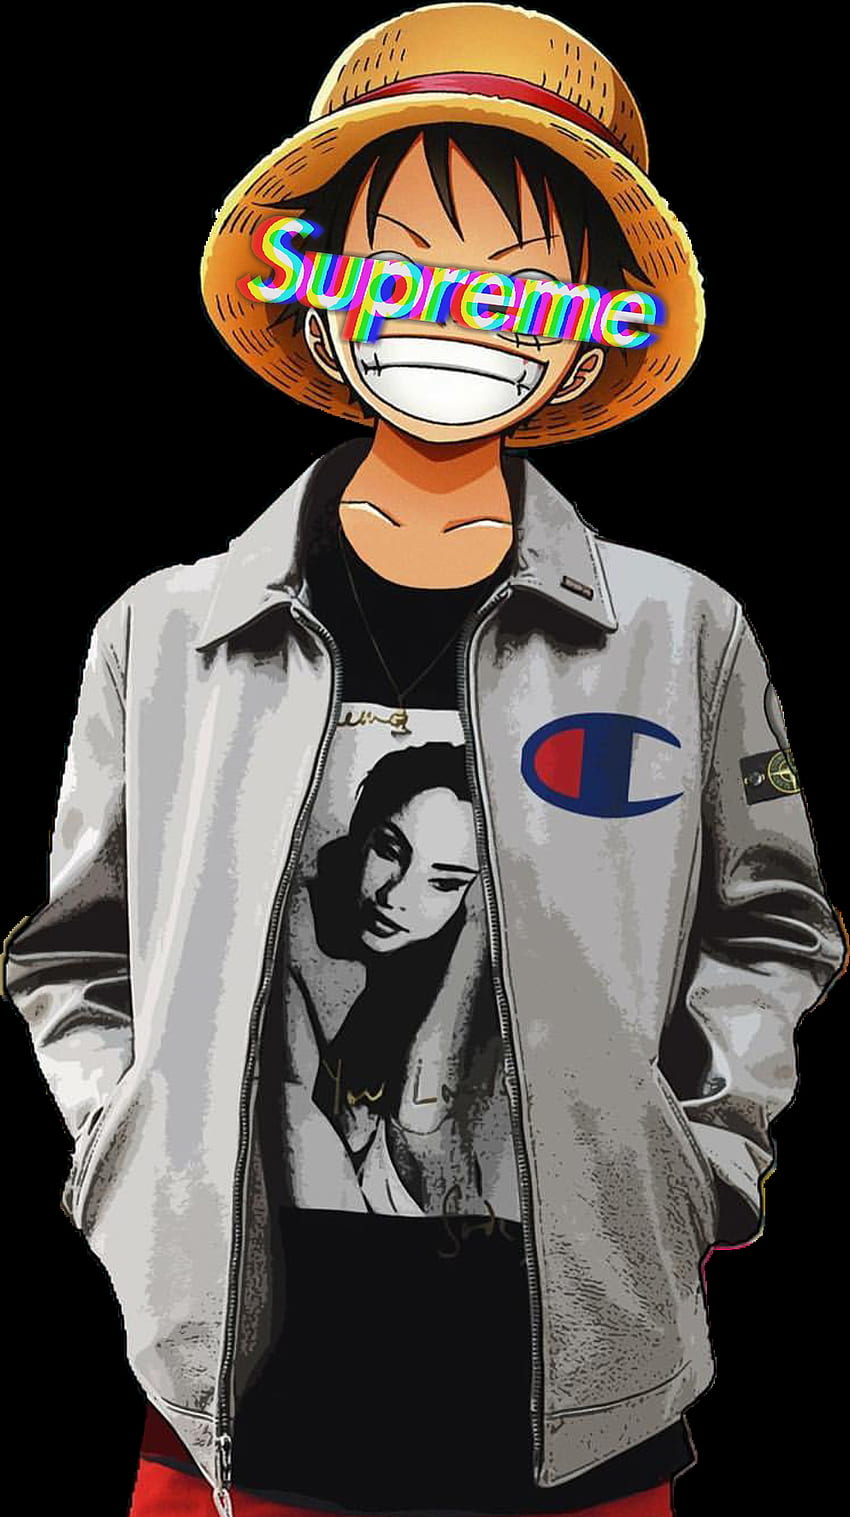 luffy rebaixado dowlond foto  Anime chibi, Luffy, One peice anime